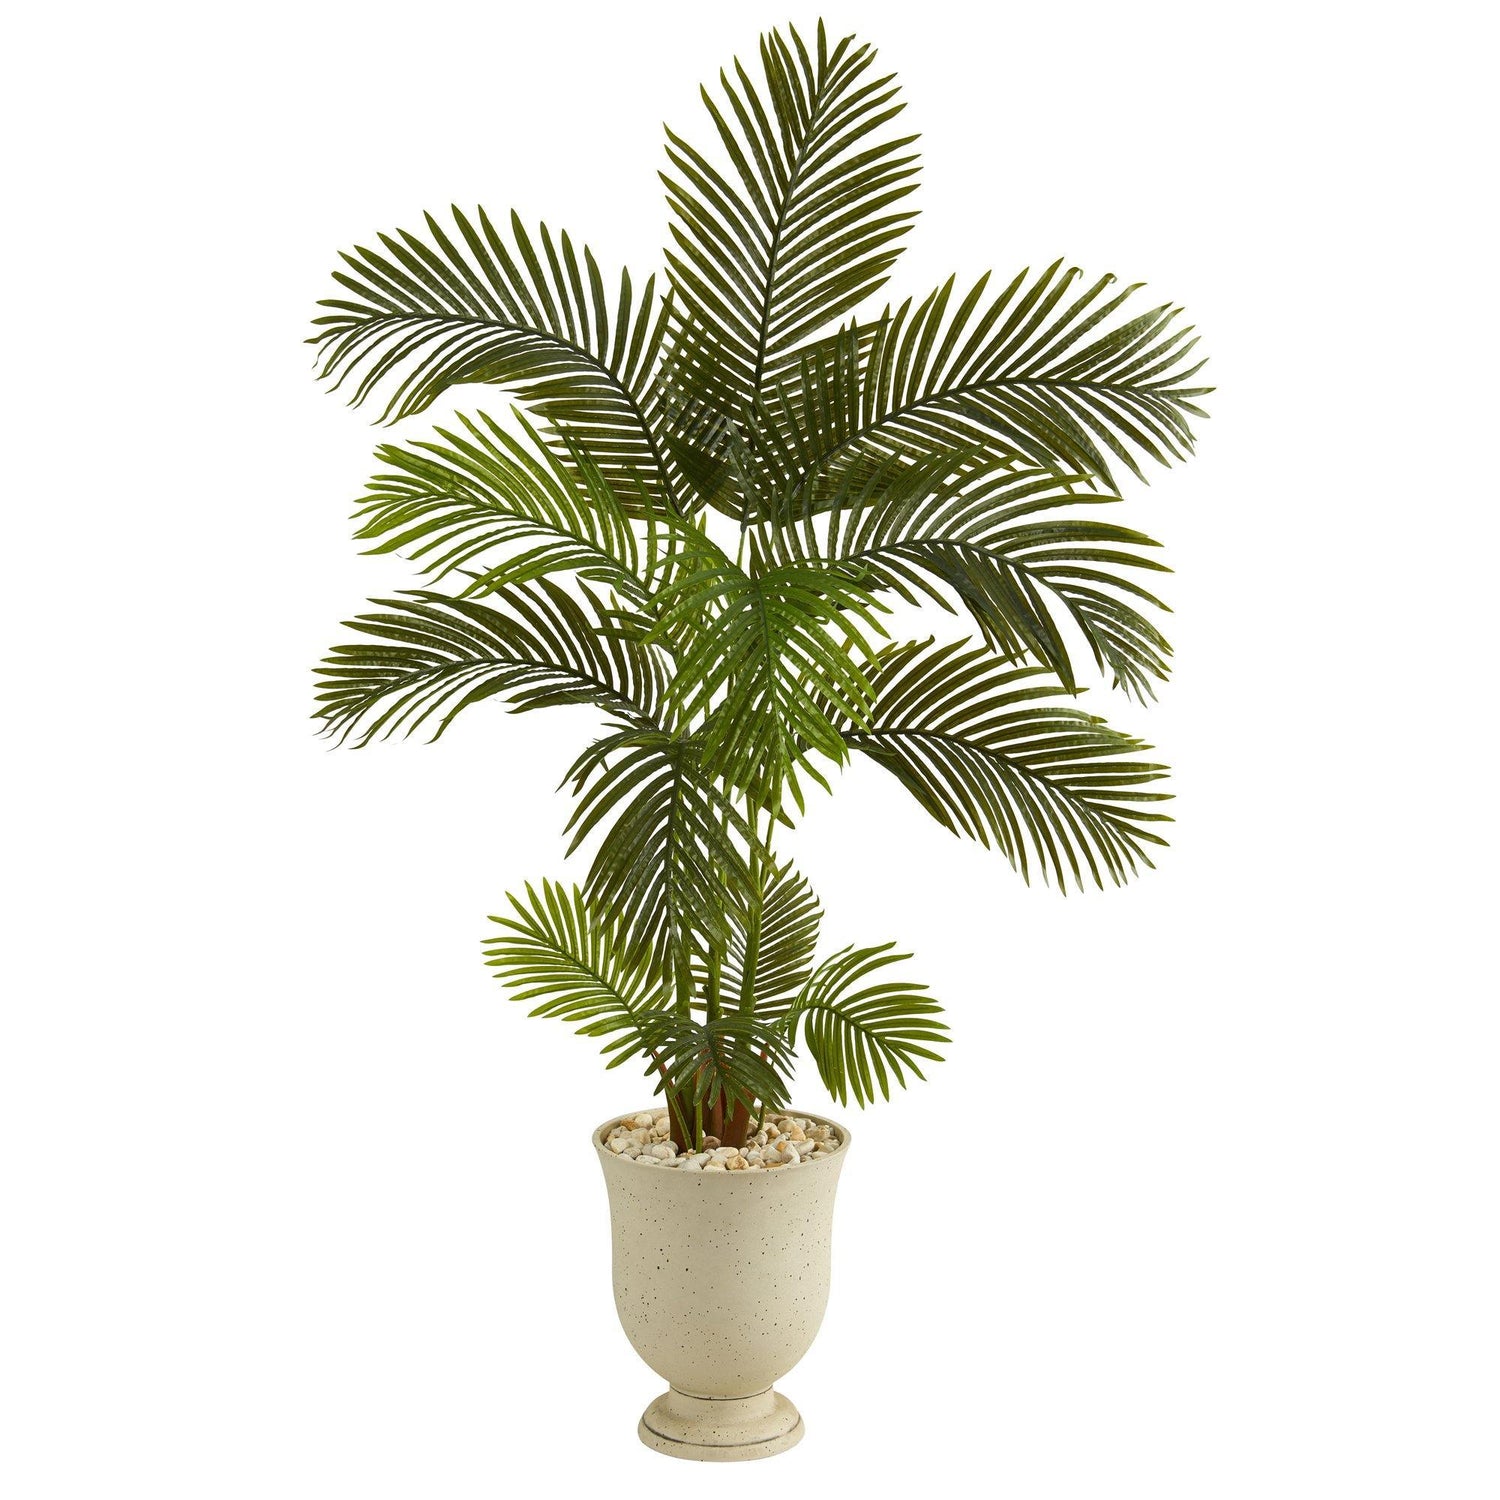 6' Areca Palm Artificial Tree in Decorative Urn